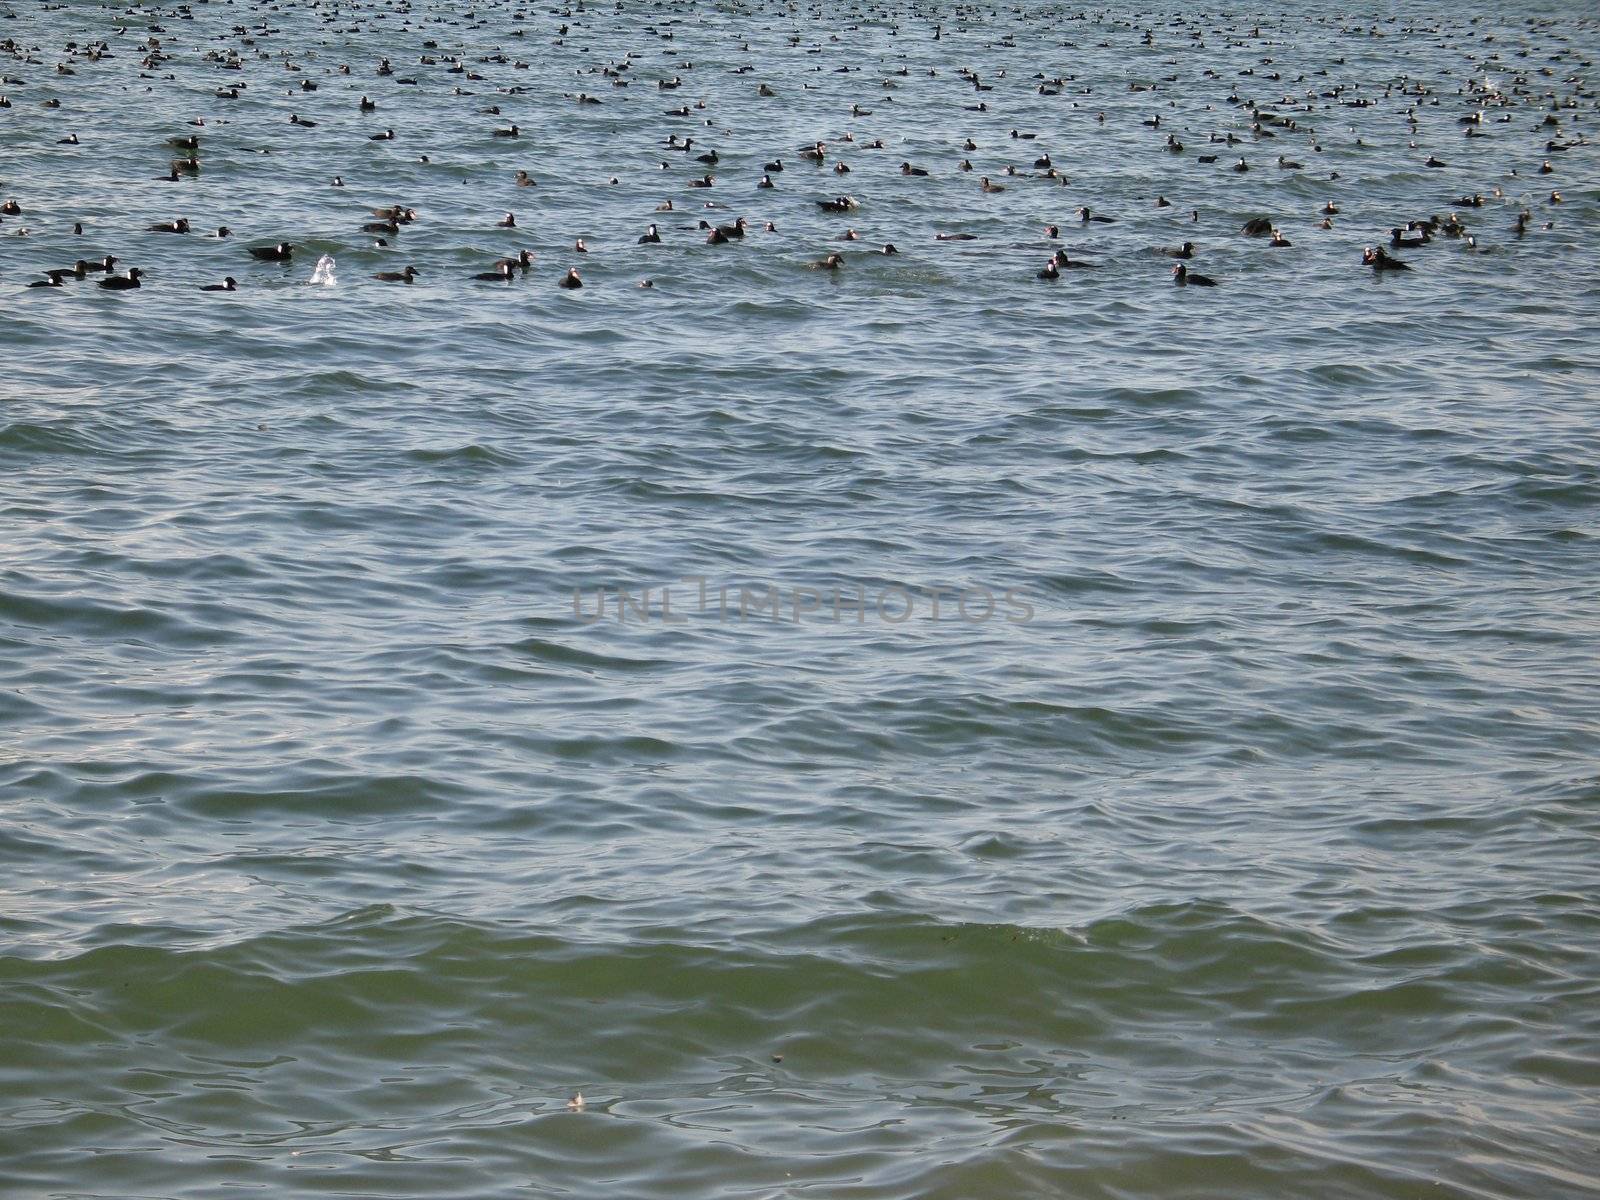 wild ducks on the ocean by mmm